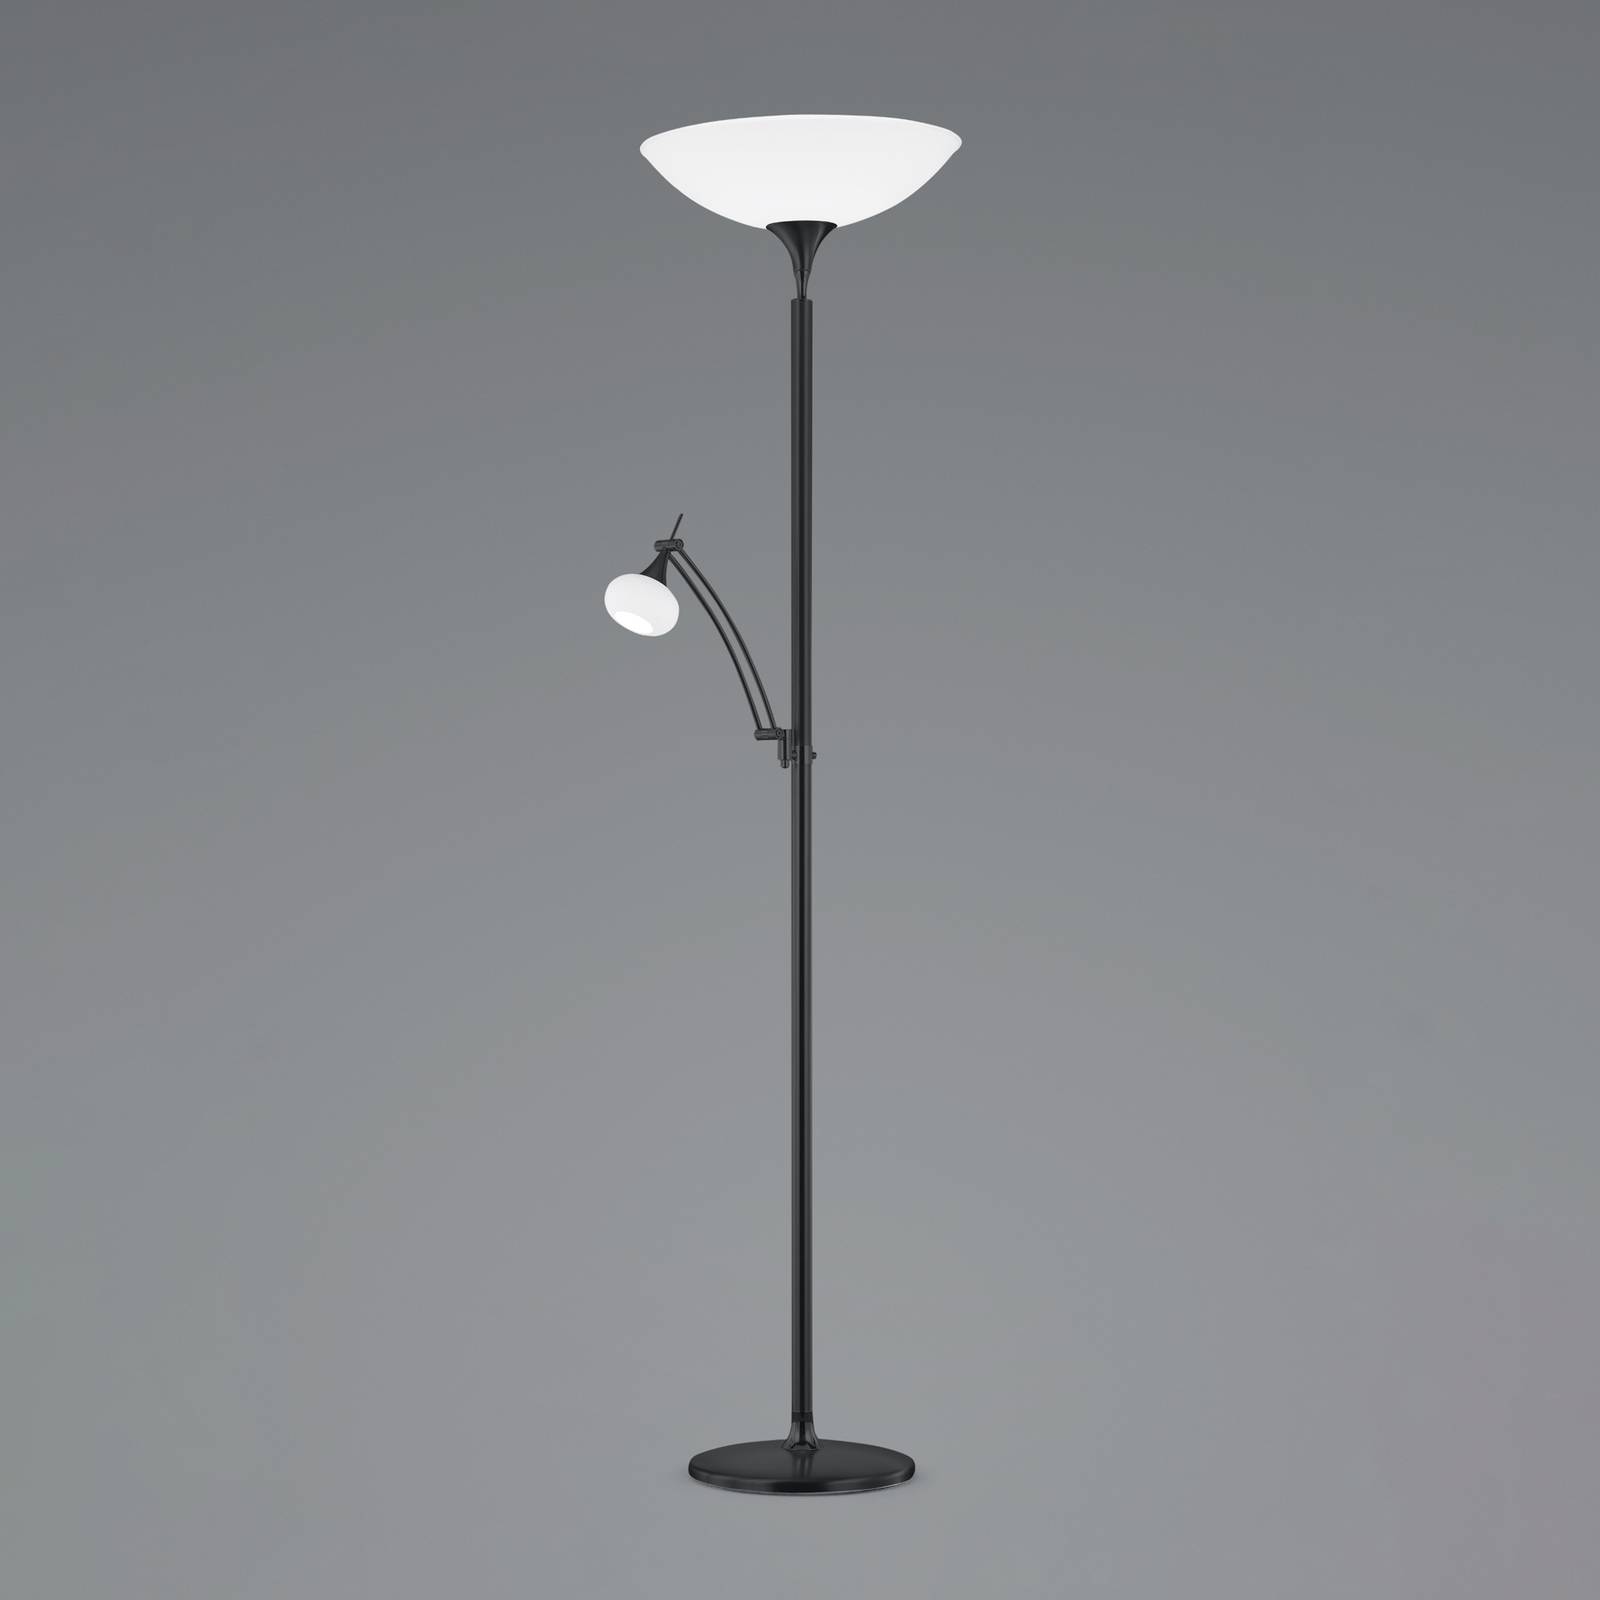 BANKAMP Opera lampadaire LED, bras liseuse, noir